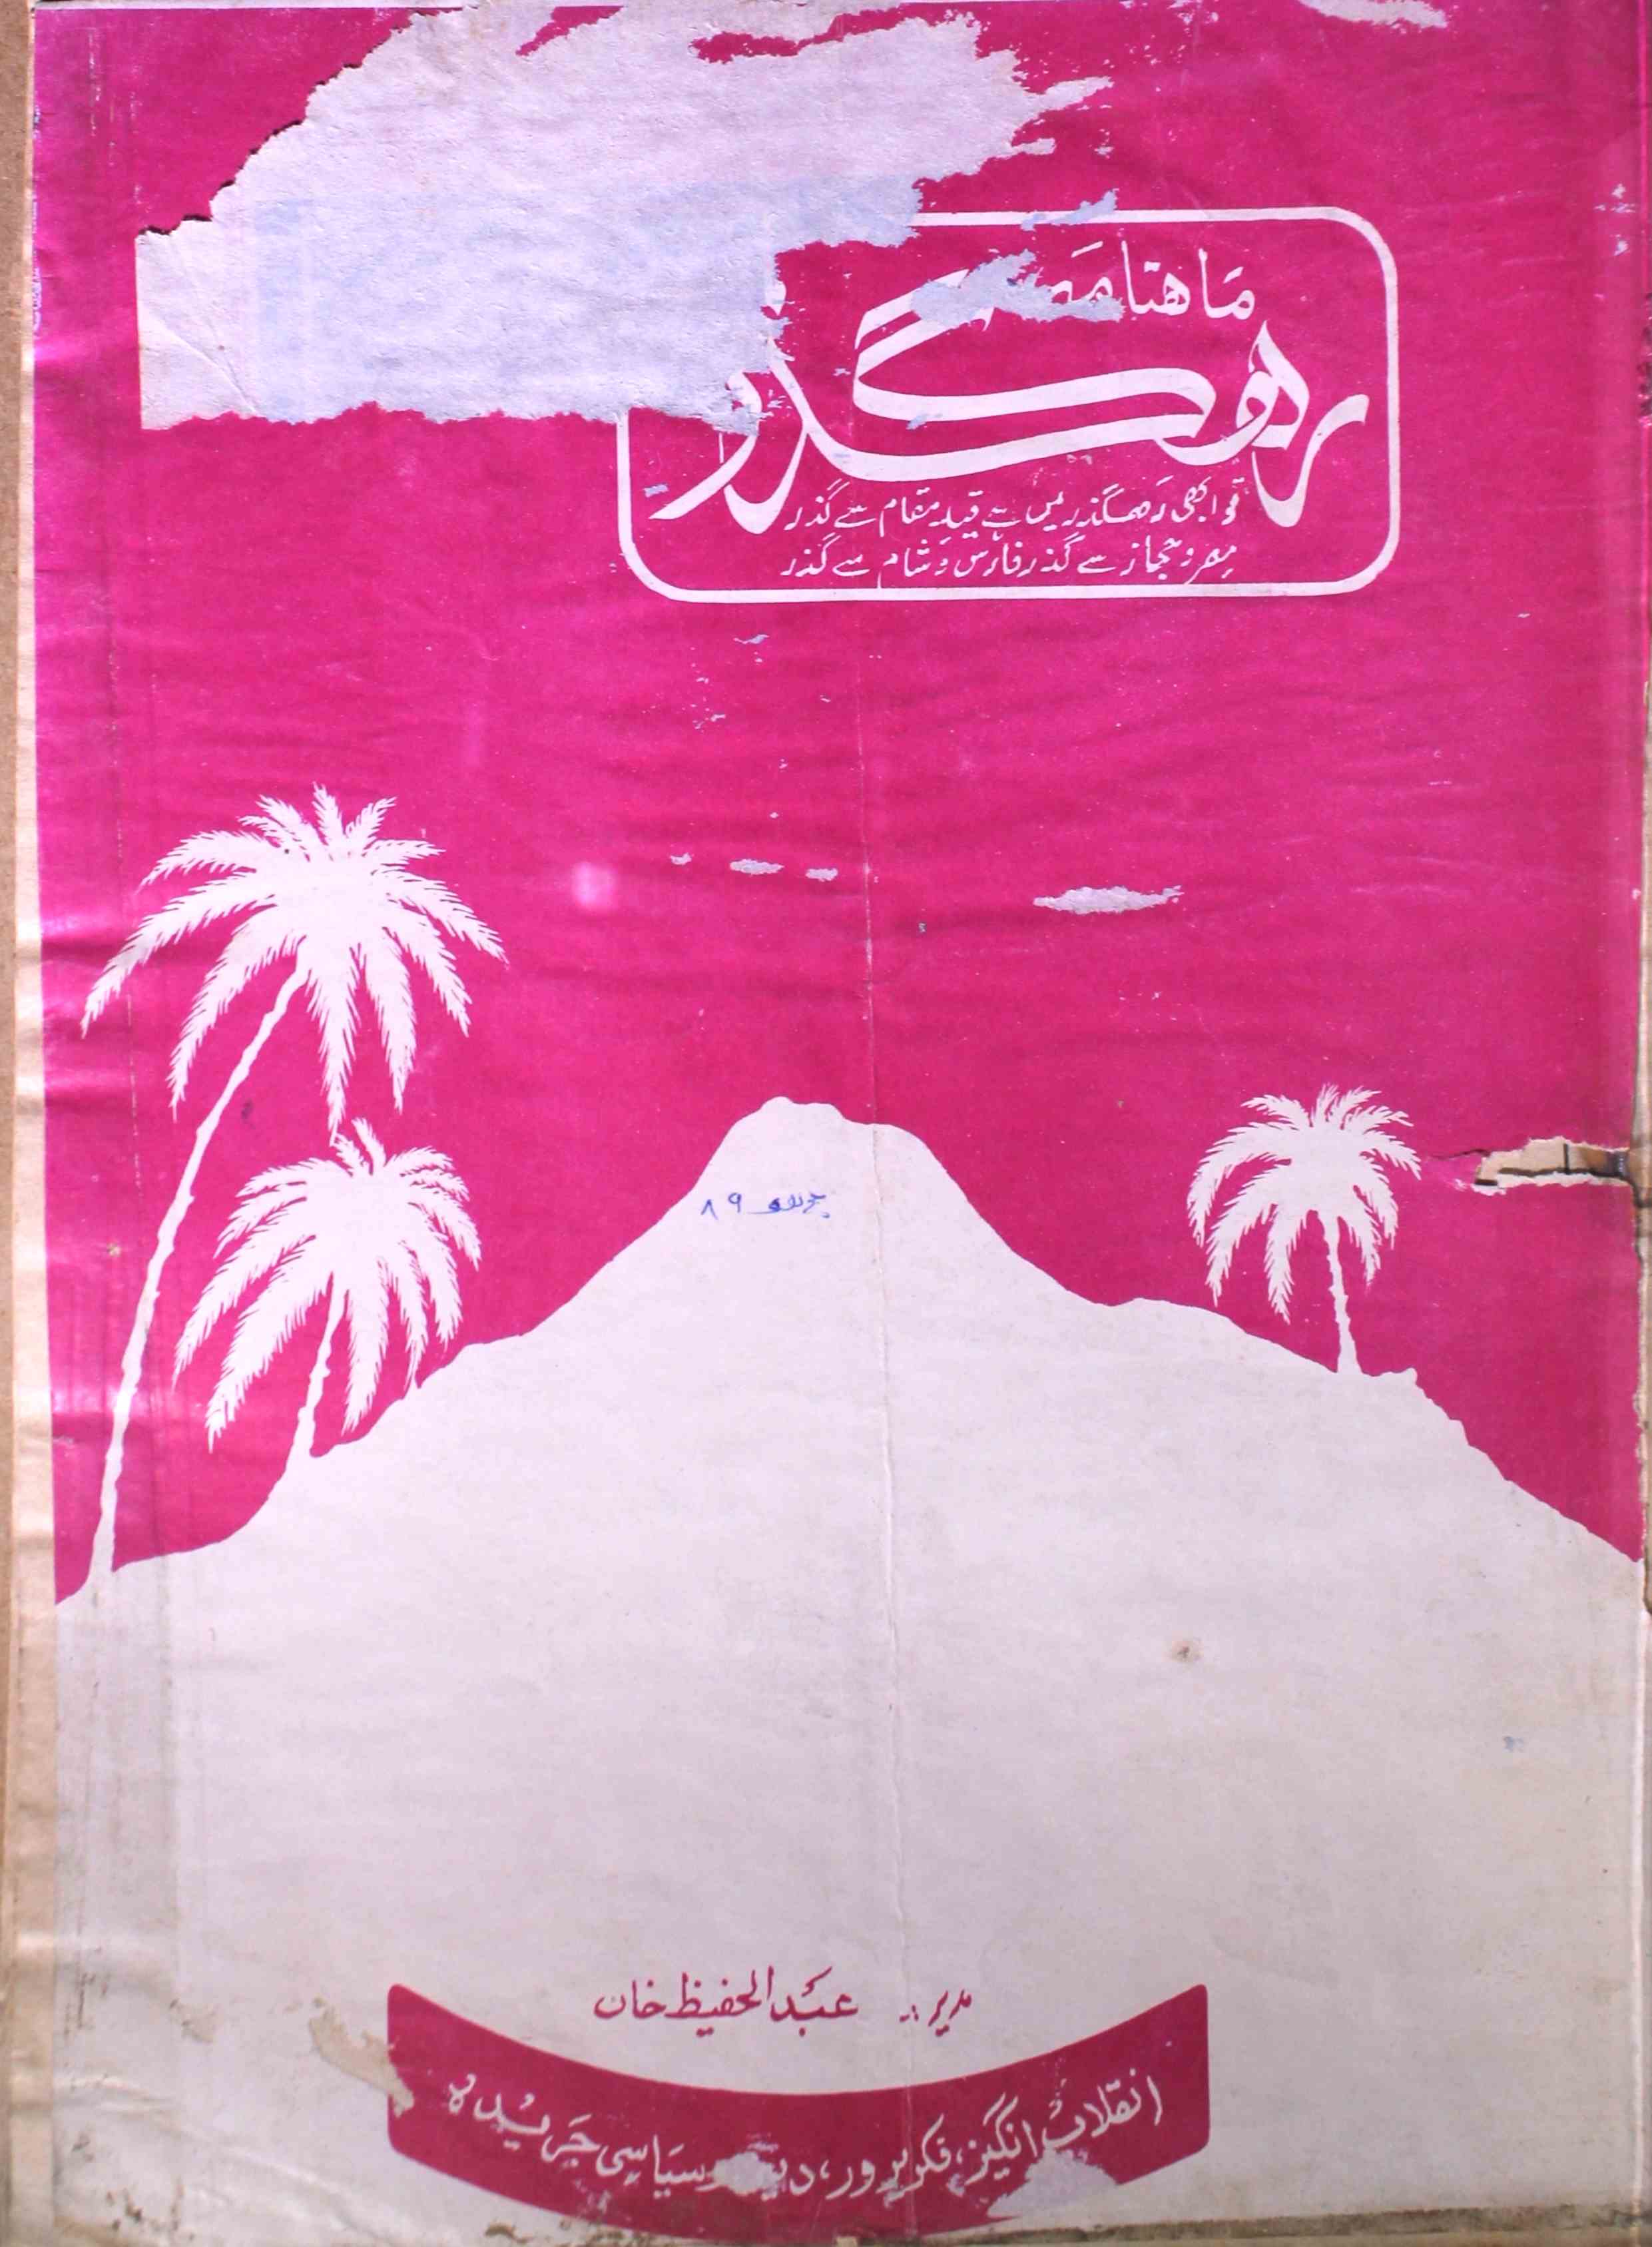 Rah Guzar Jild 7 No 4/64 July 1989-SVK